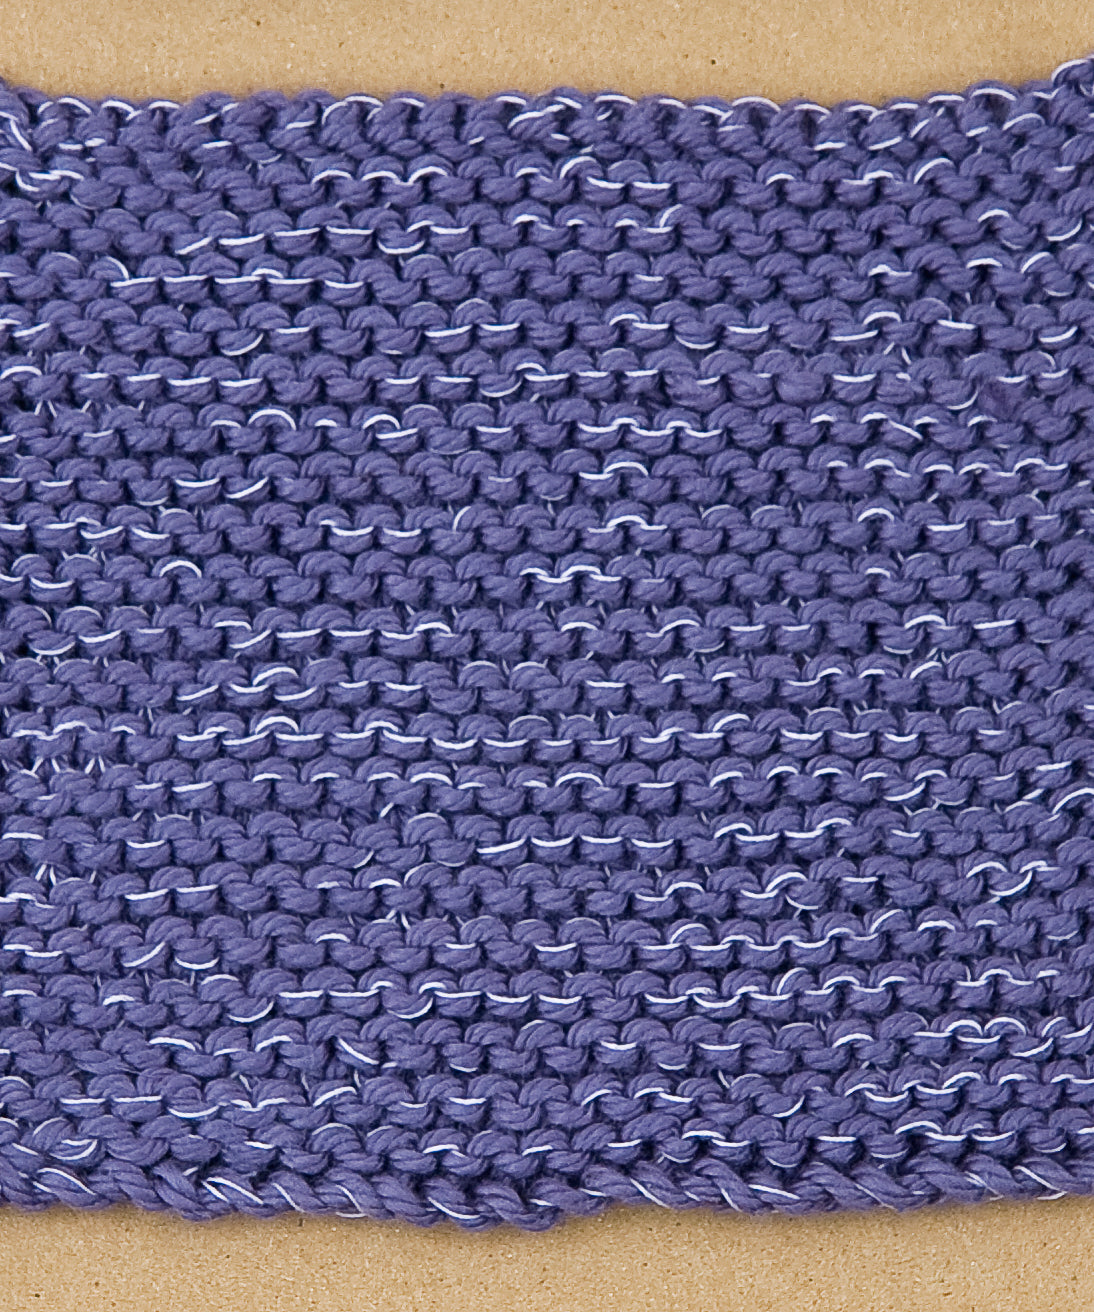 How to knit Garter Stitch